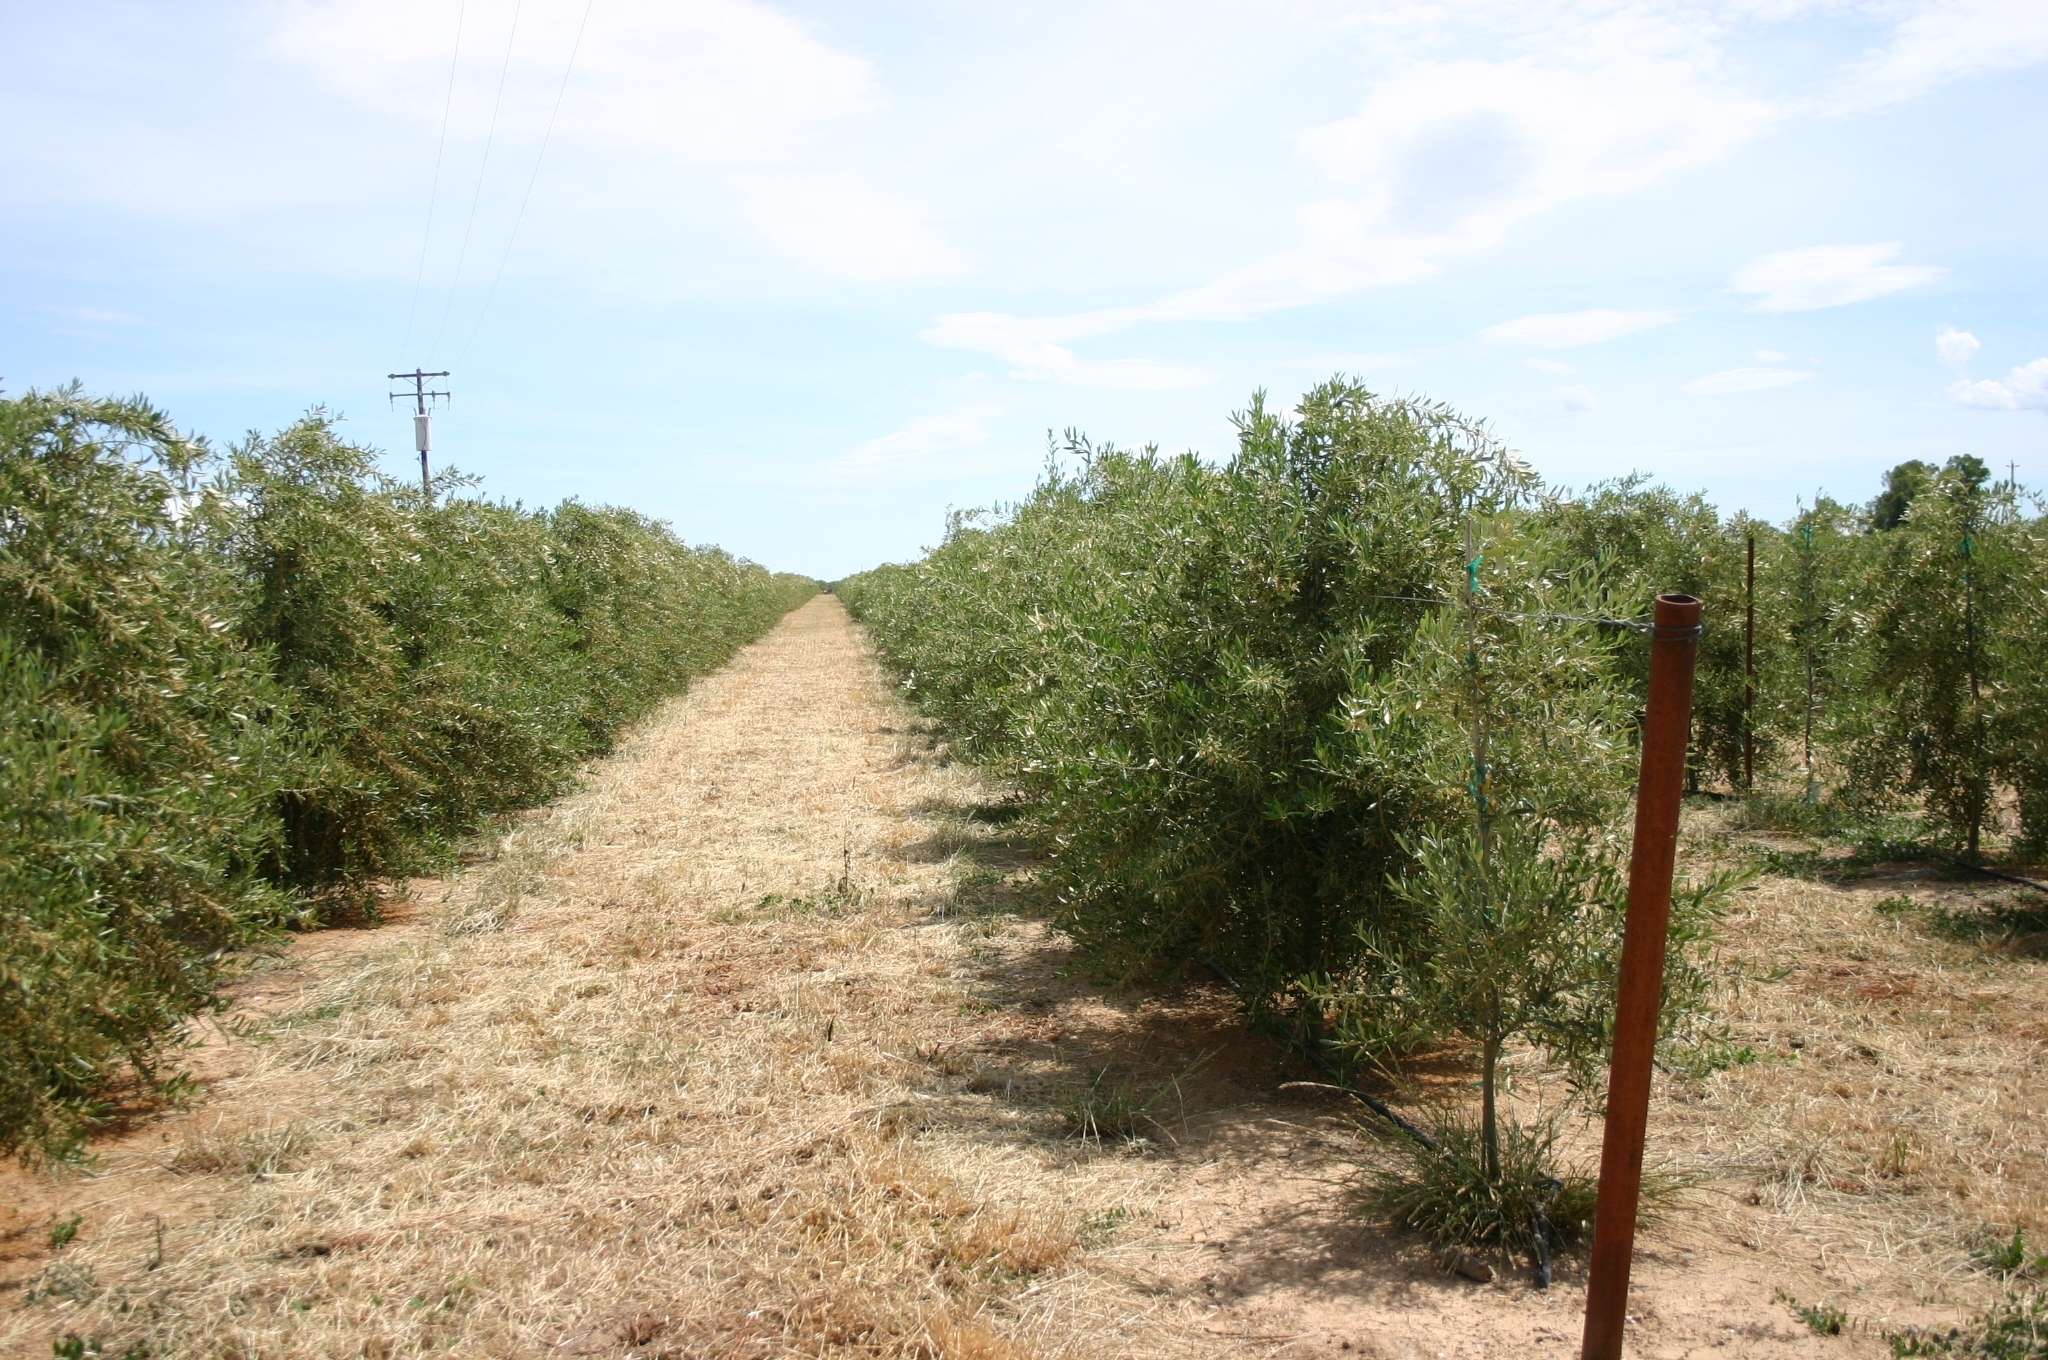 Can I Grow Olive Trees in Phoenix, Arizona?